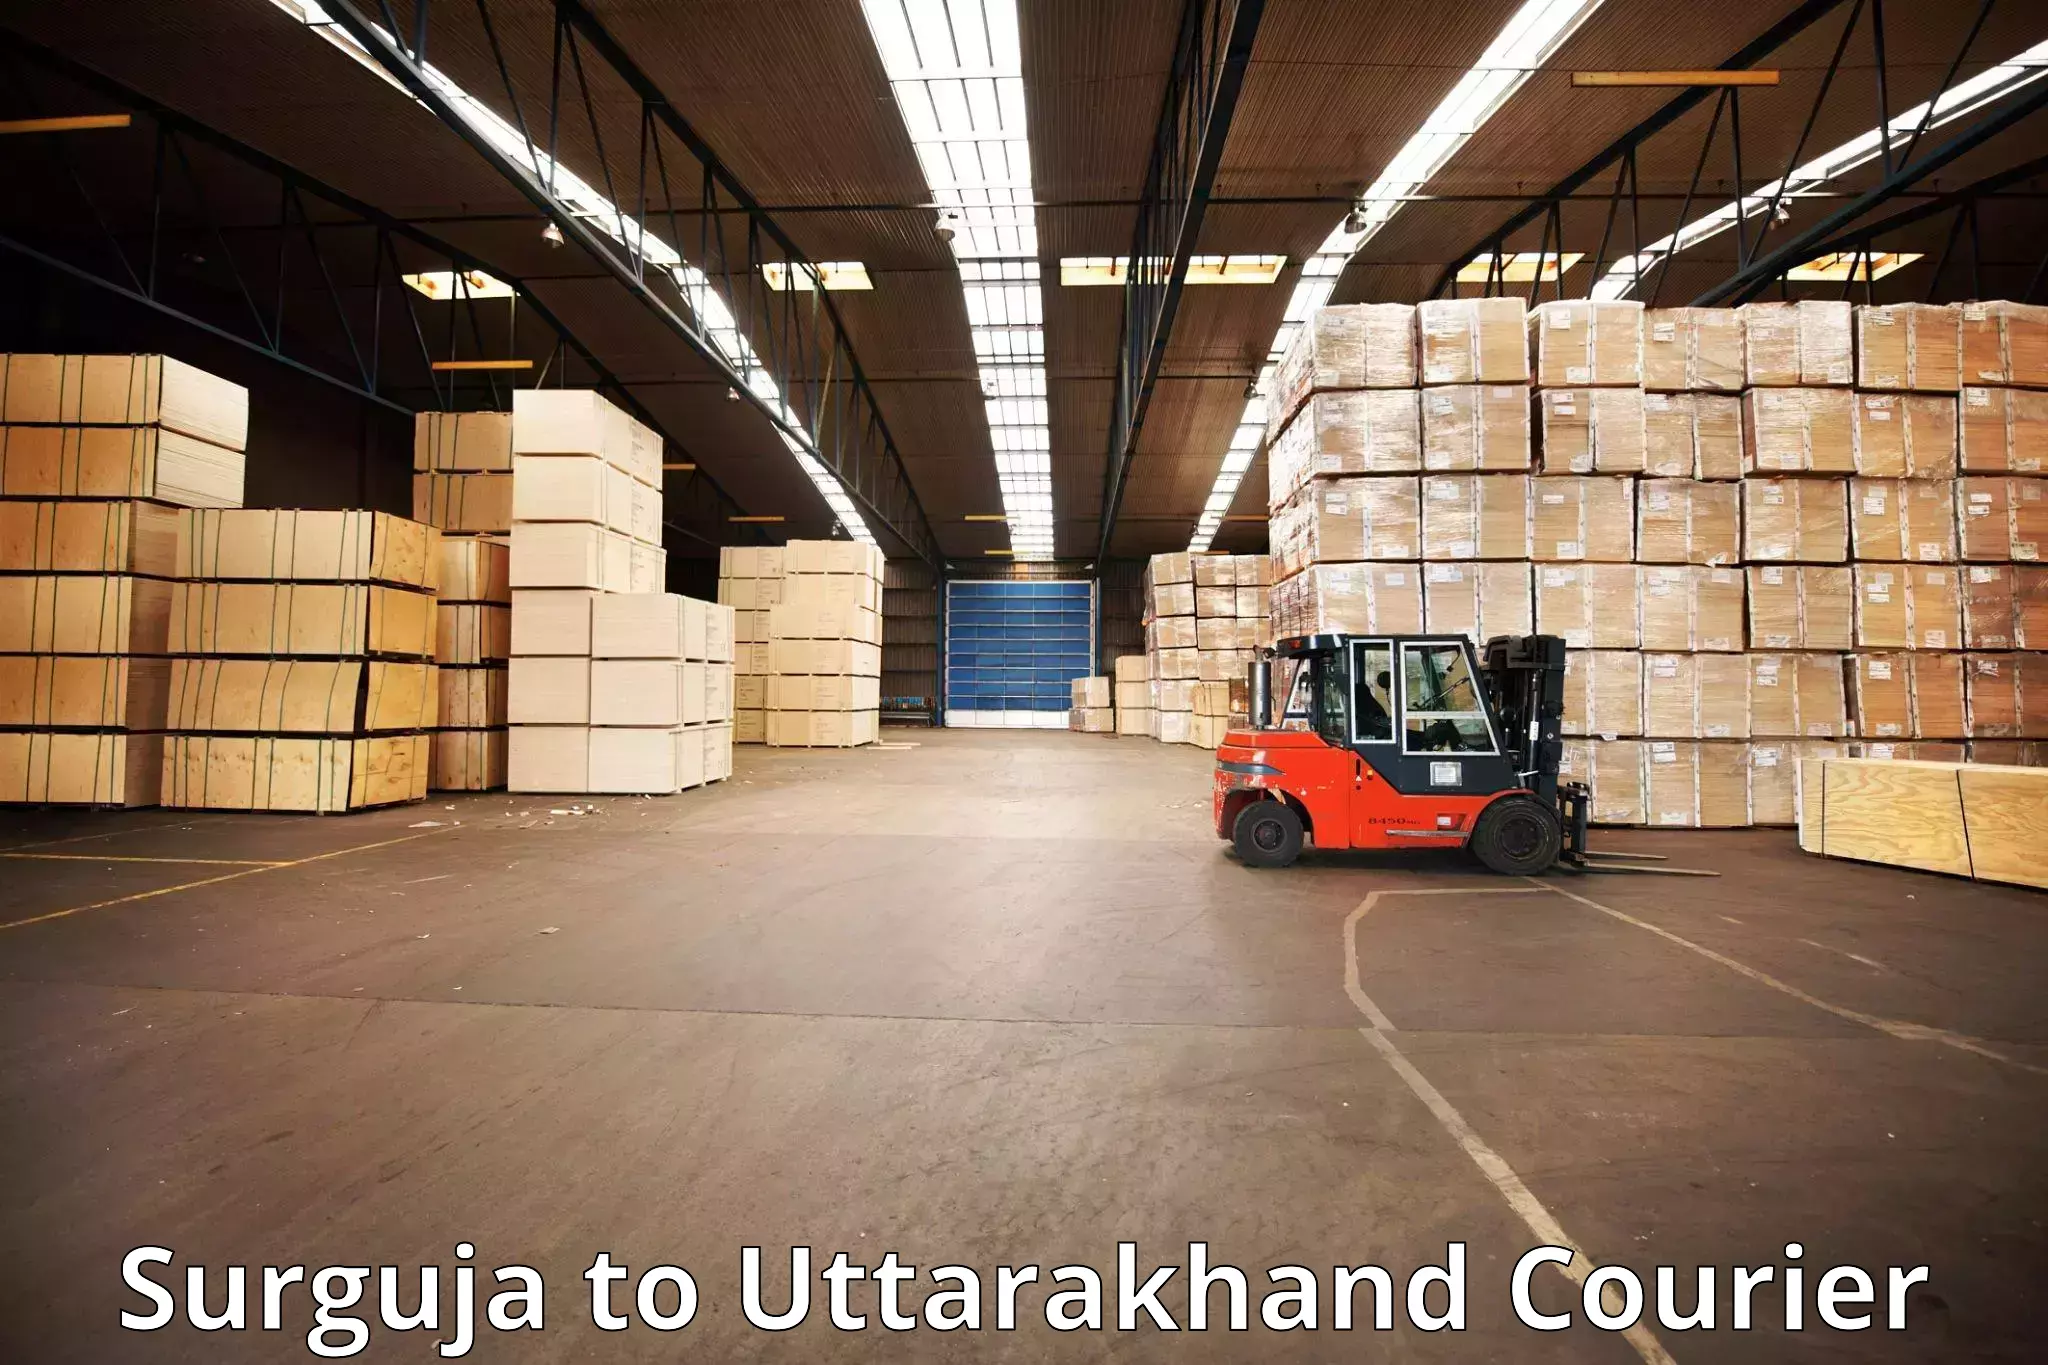 Luggage transport company Surguja to Rishikesh